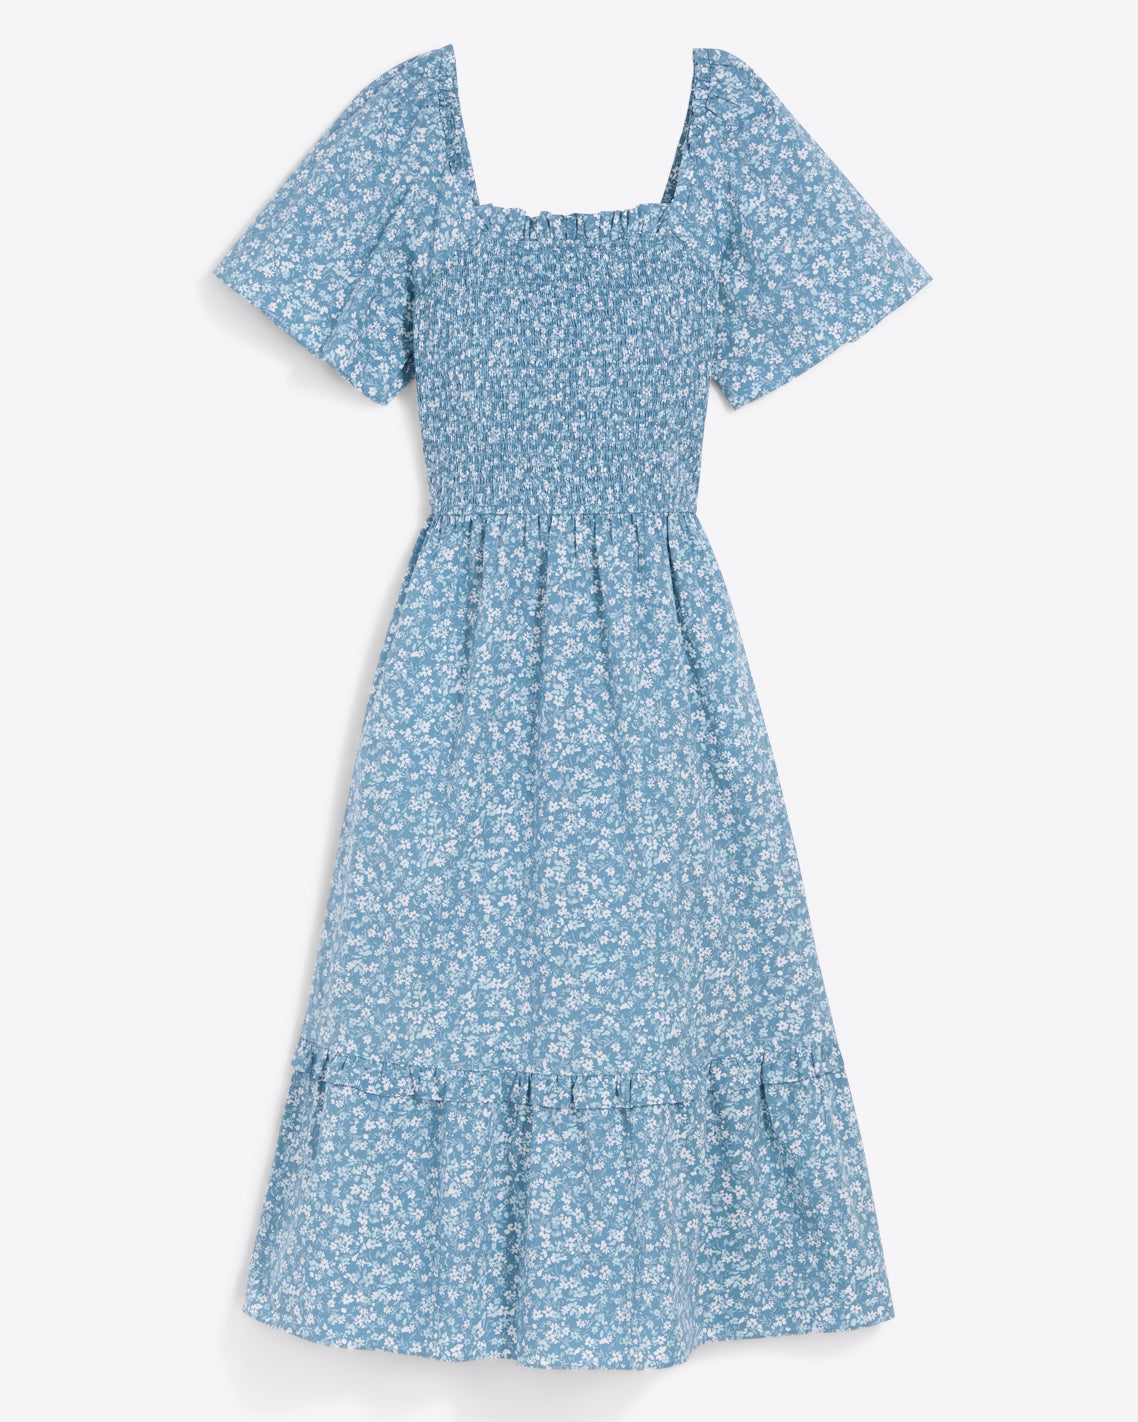 Deana Smocked Dress in Bluebell Floral